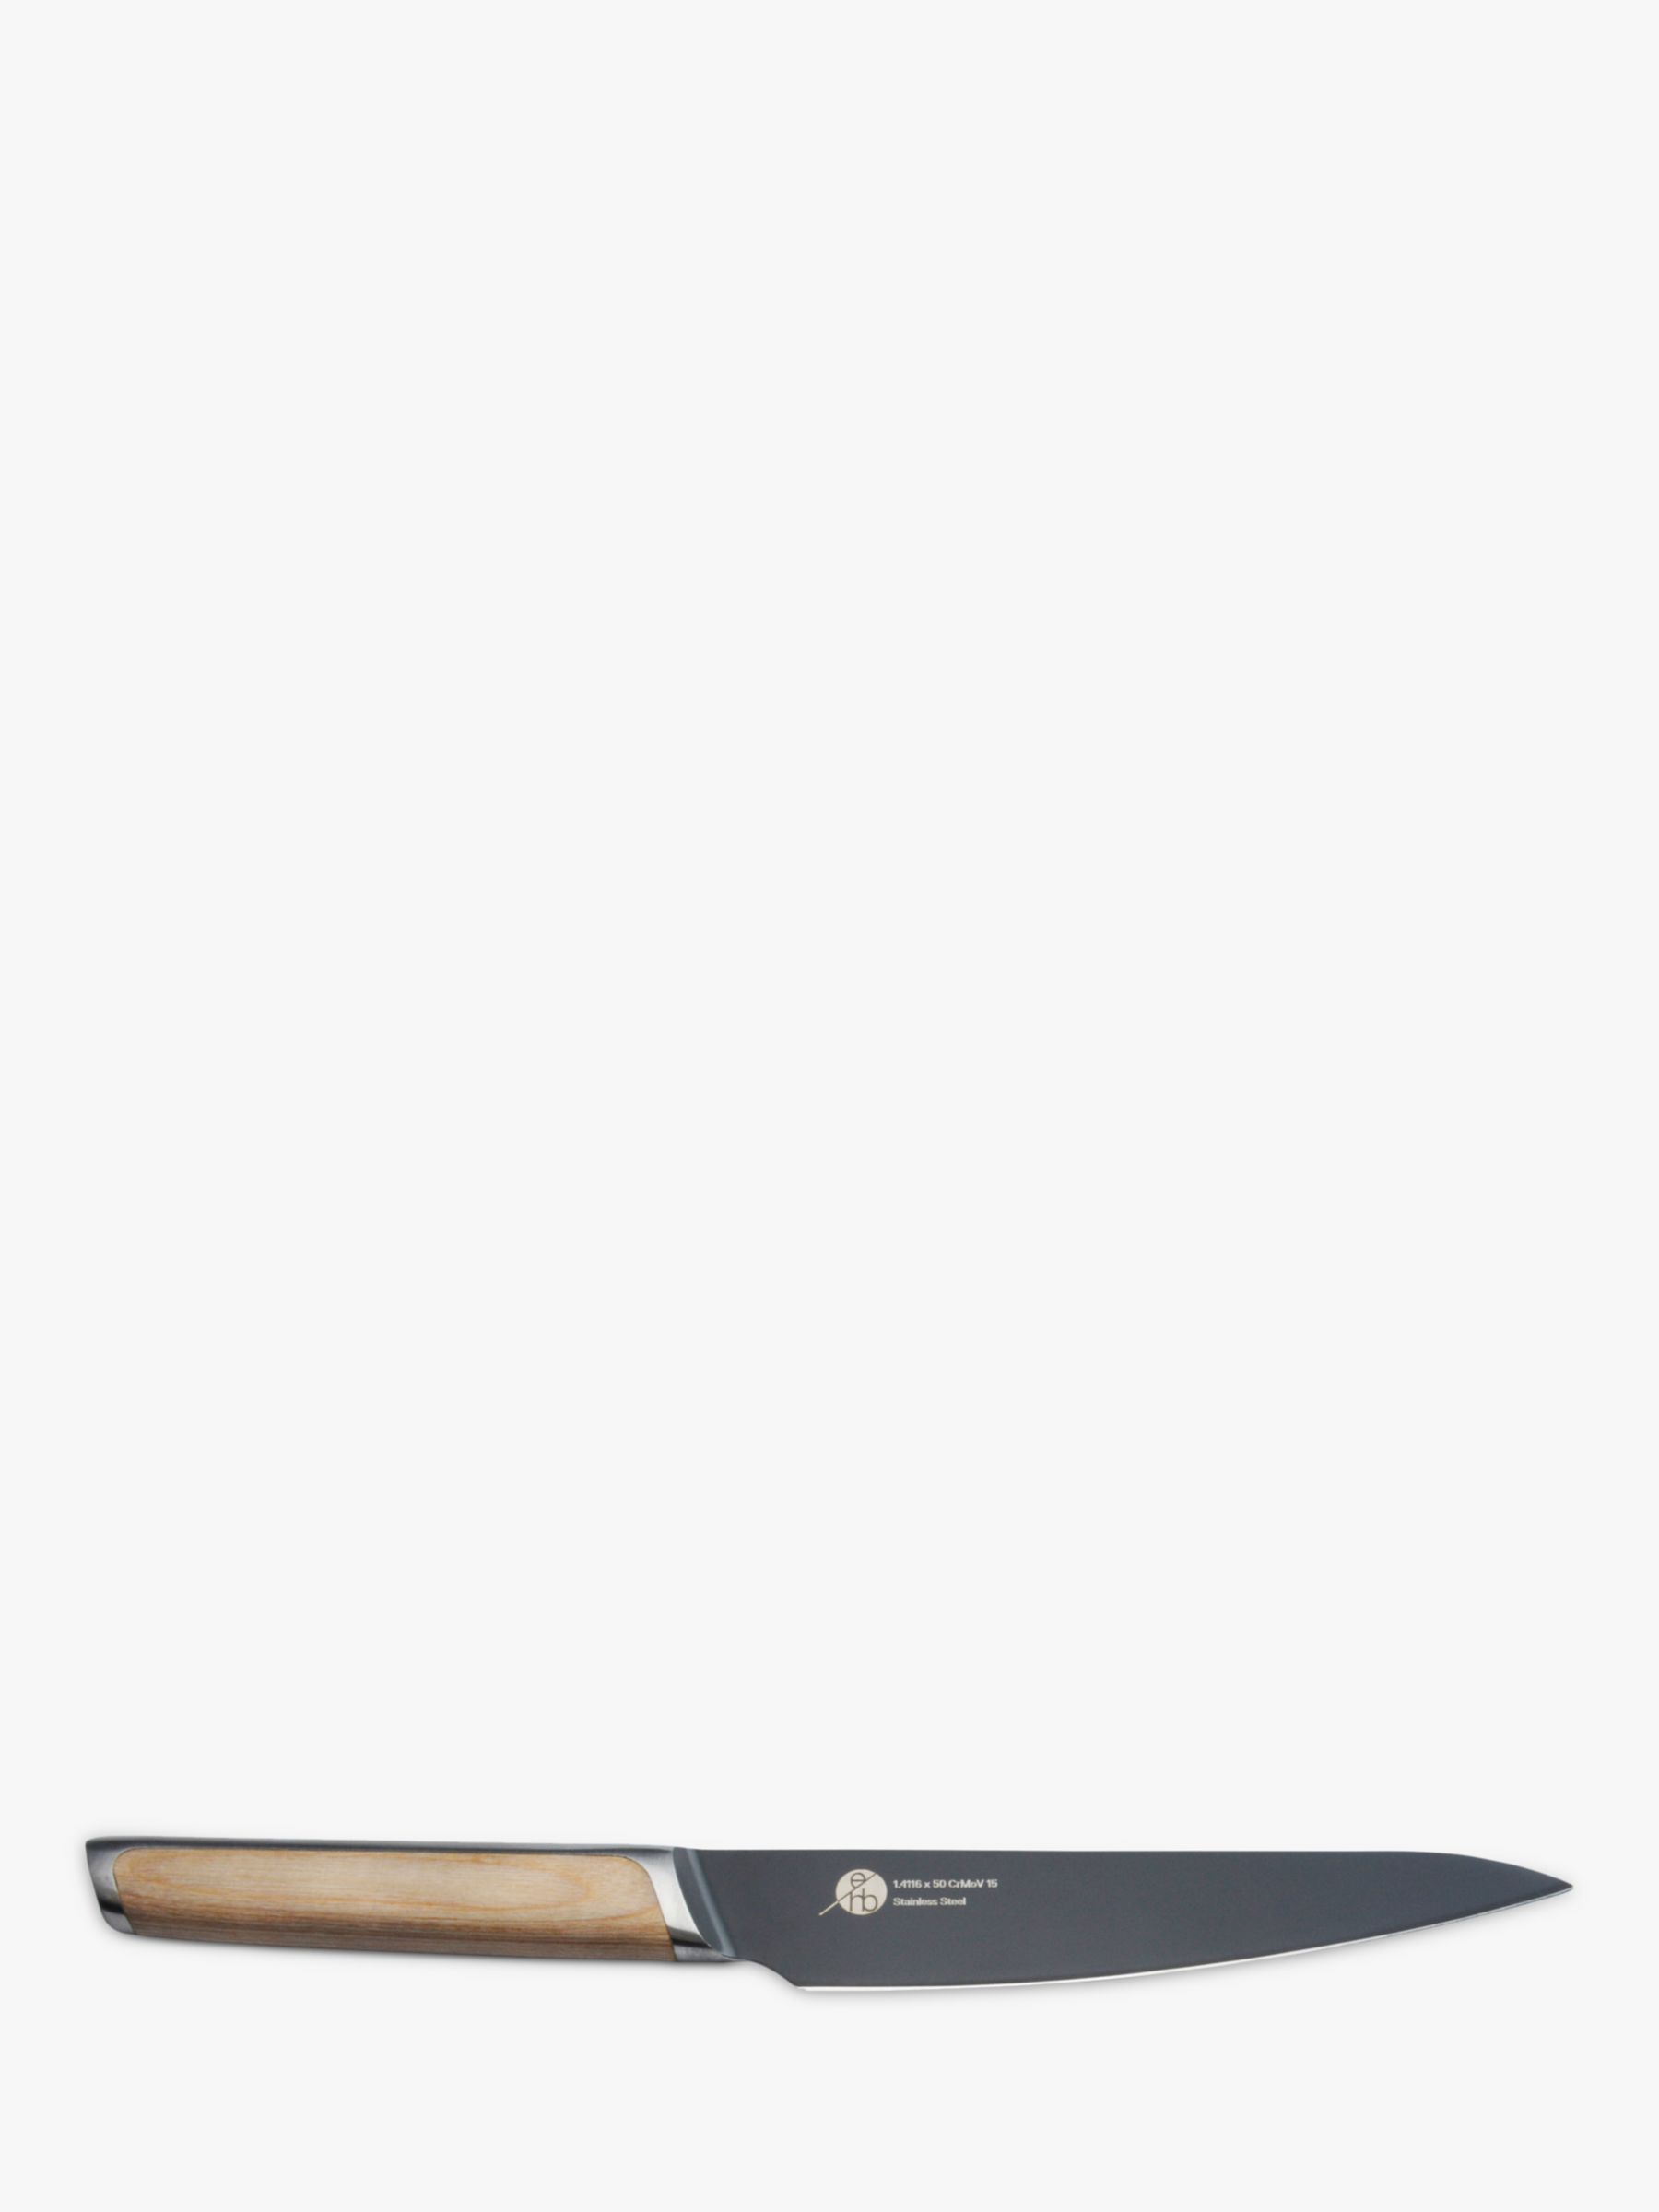 Everdure By Heston Blumenthal Wood Handle Utility Knife, 15cm